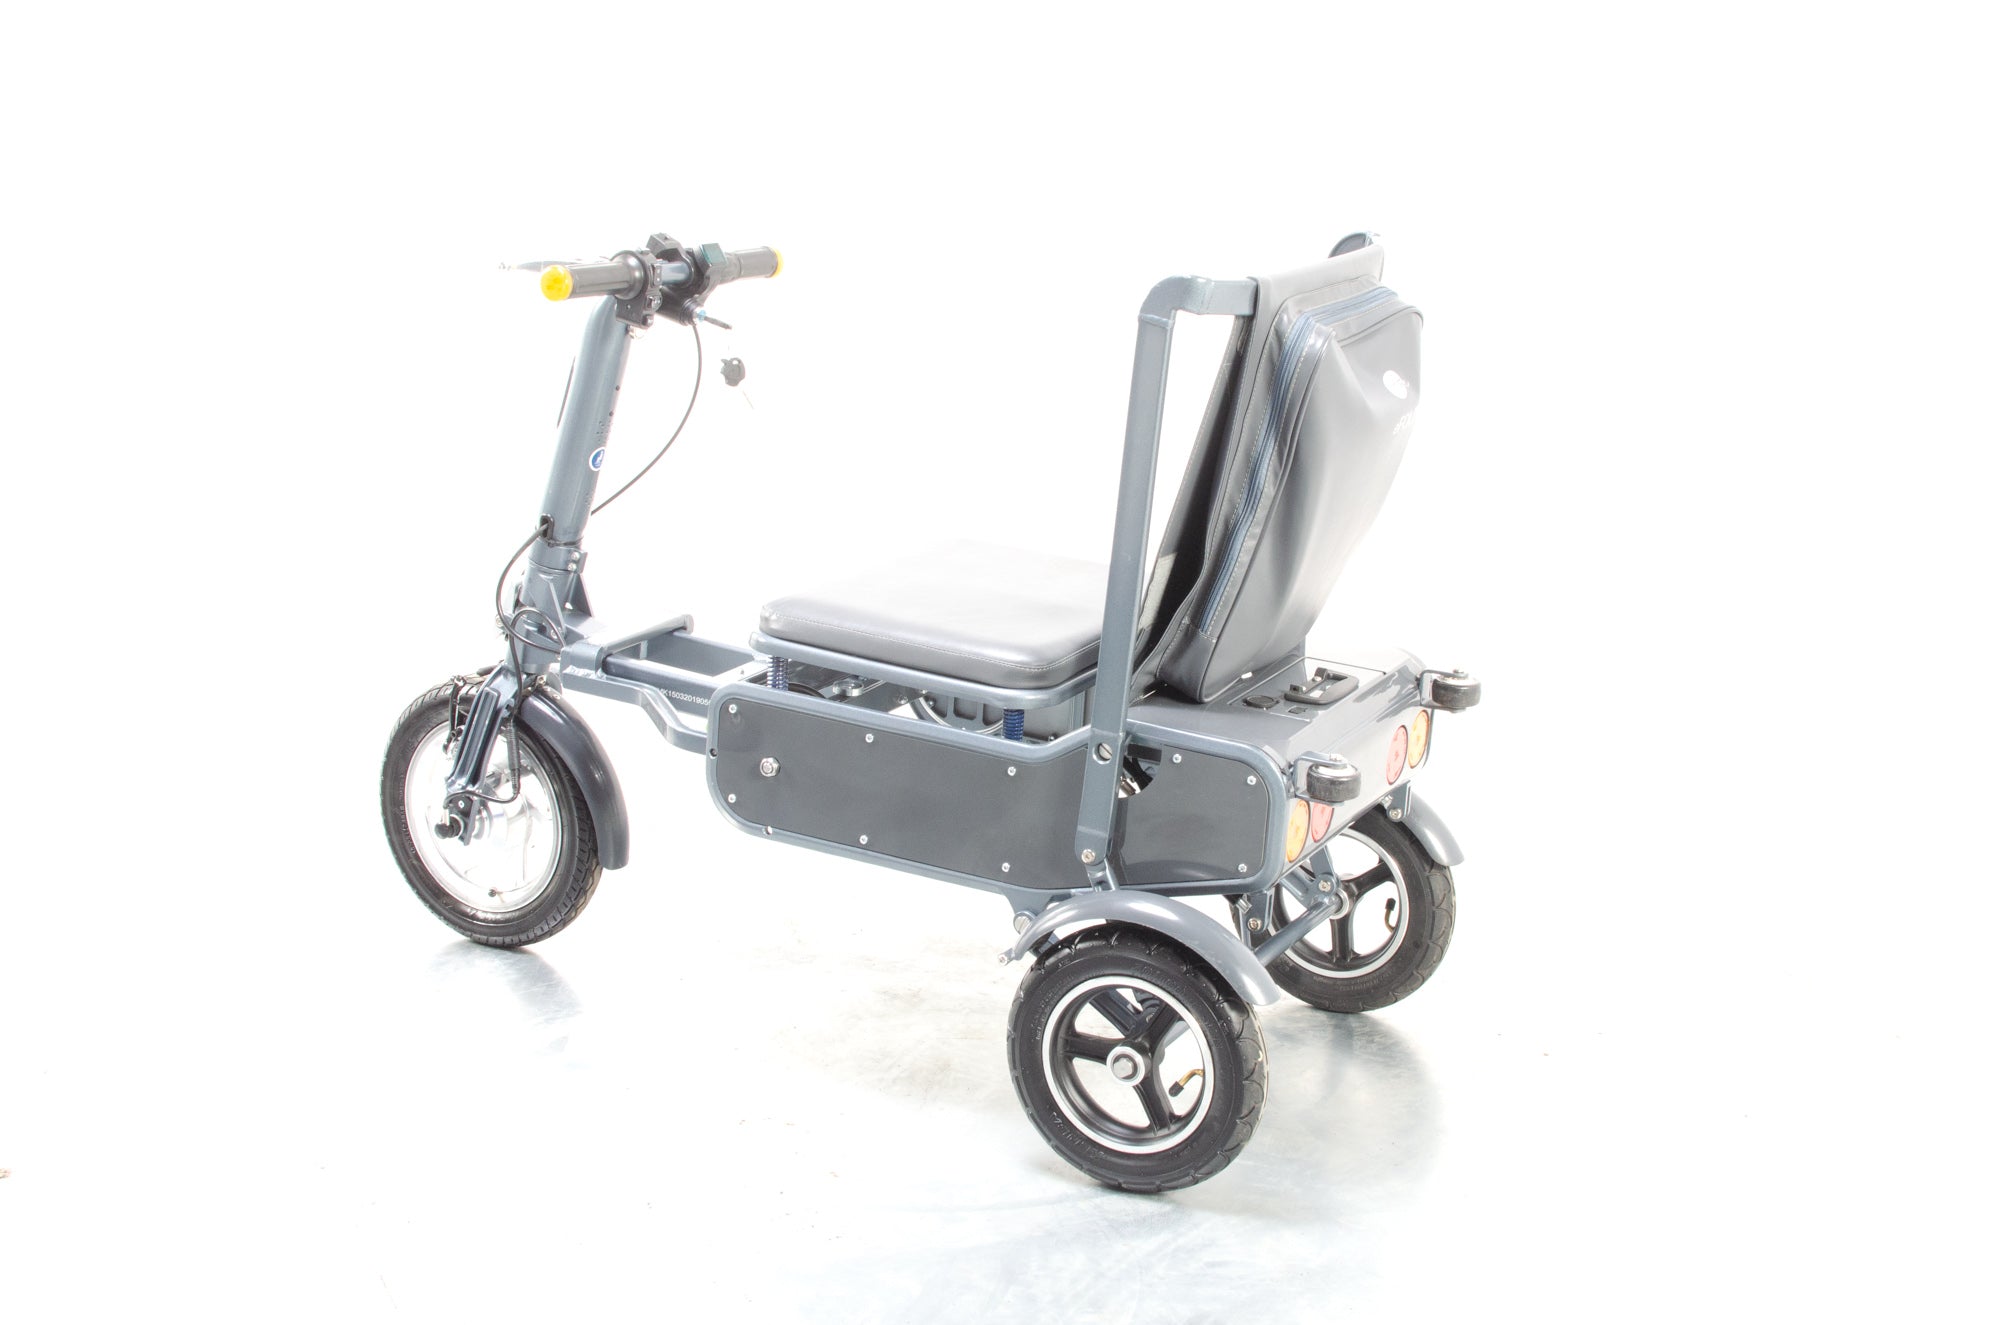 eFOLDI Mobility Scooter Lightweight Folding Electric 8mph MK1.5